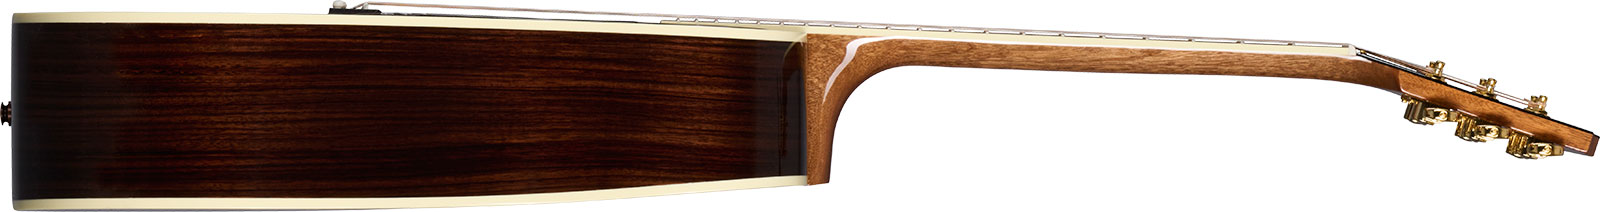 Gibson Hummingbird Standard Rosewood Dreadnought Epicea Acajou Rw - Rosewood Burst - Electro acoustic guitar - Variation 2